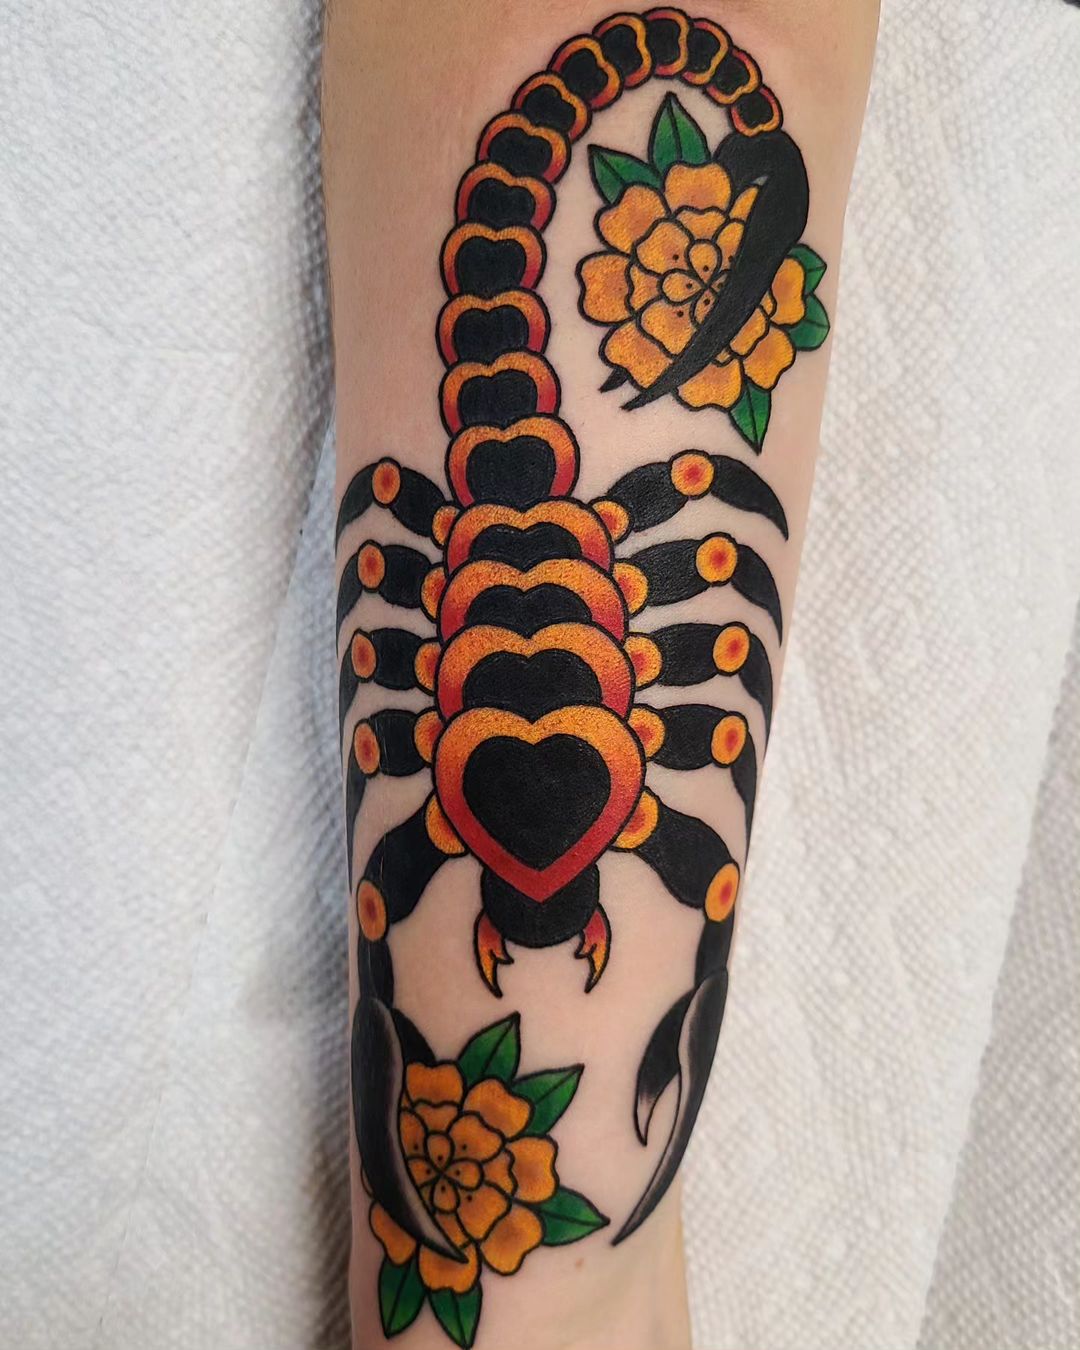 Scorpio tattoo design by michaela.rose .tattoo